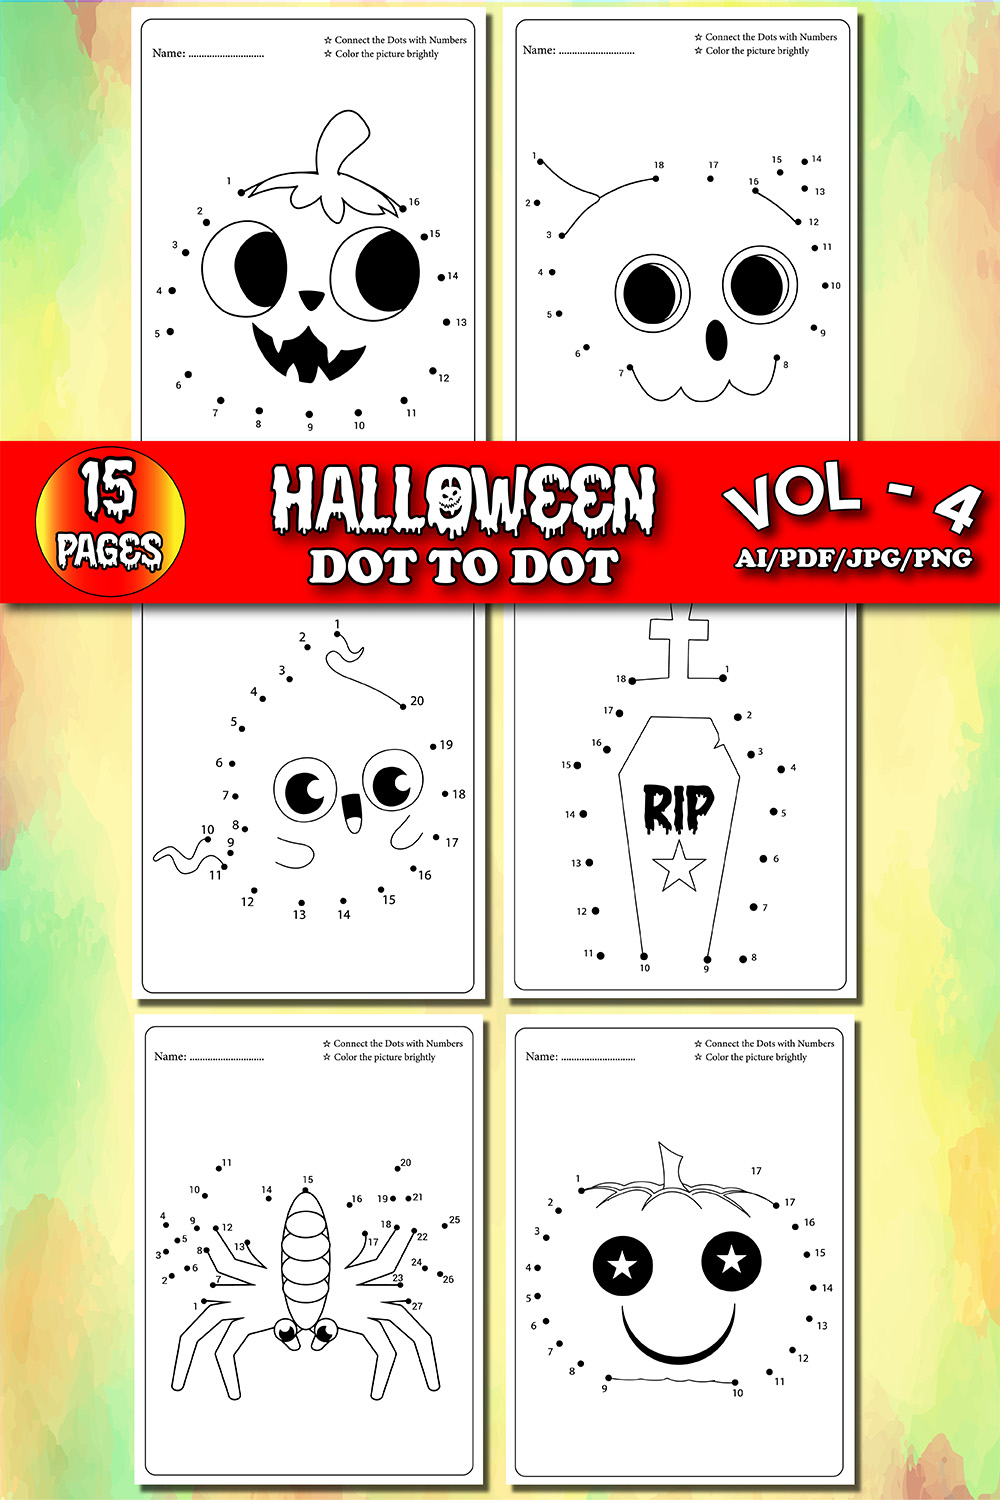 Halloween Dot To Dot For Kids Vol - 4 printerest image.